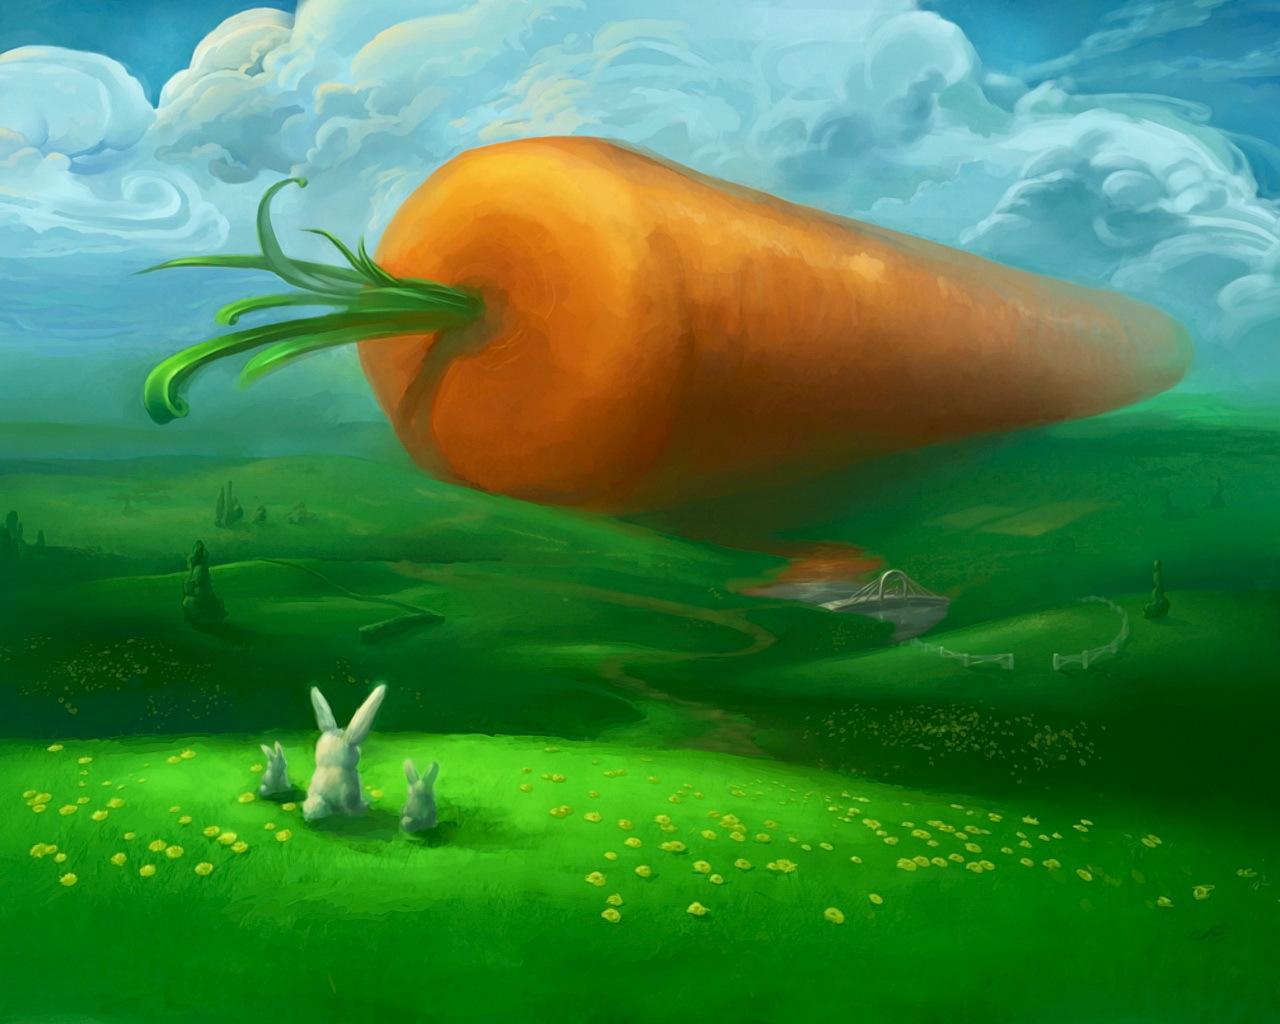 Carrot Wallpaper Image